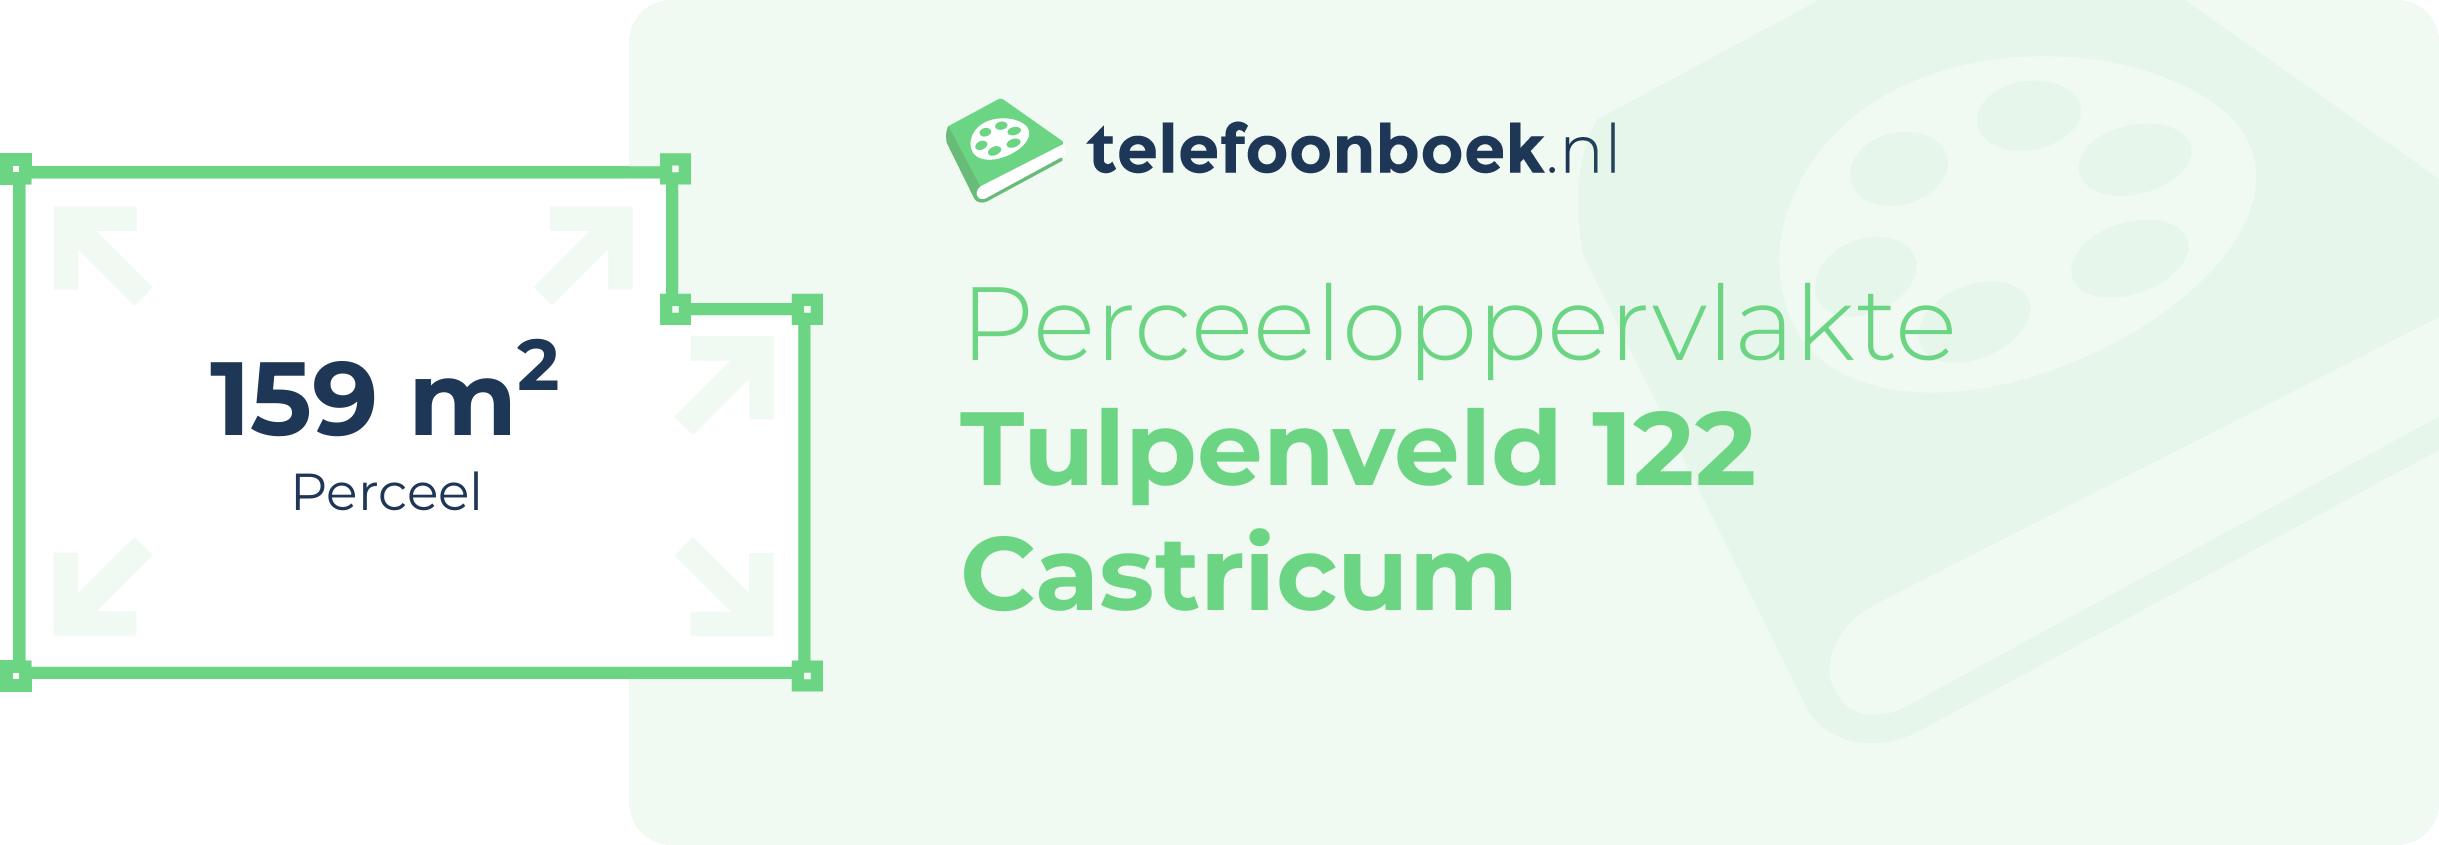 Perceeloppervlakte Tulpenveld 122 Castricum